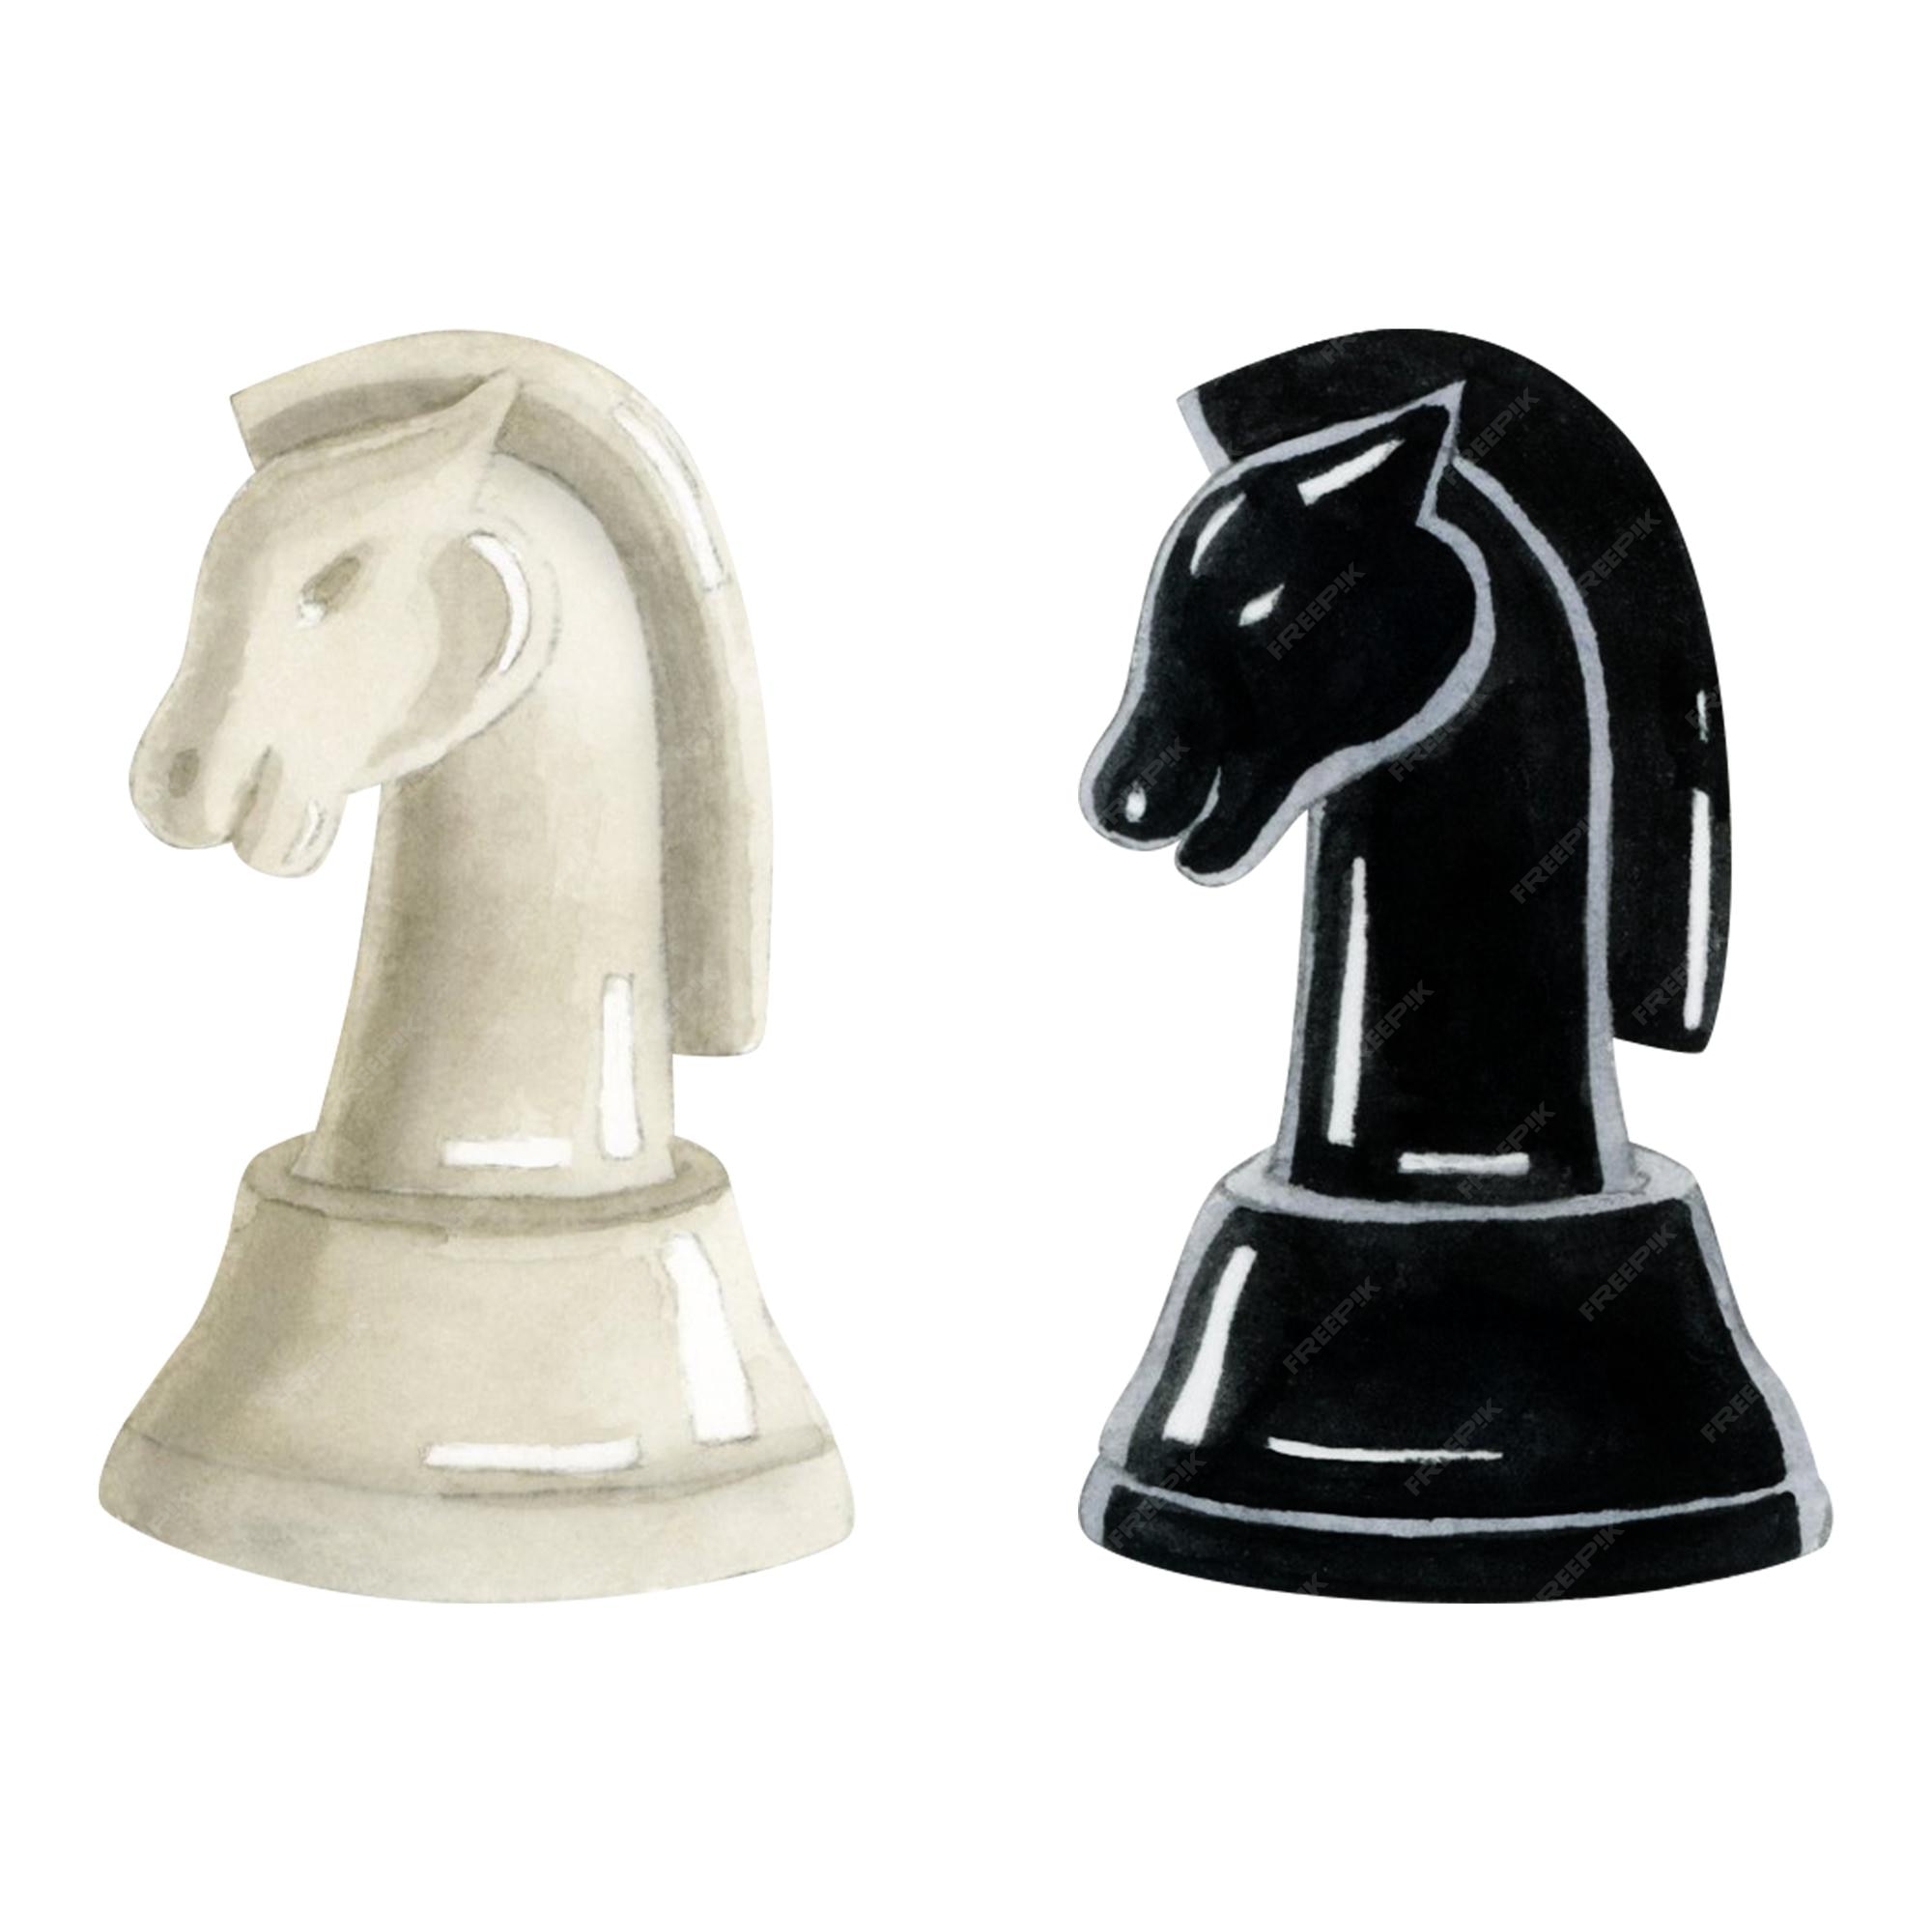 Dois Vetores - Peças De Xadrez Preto E Branco - Cavalo. Elementos